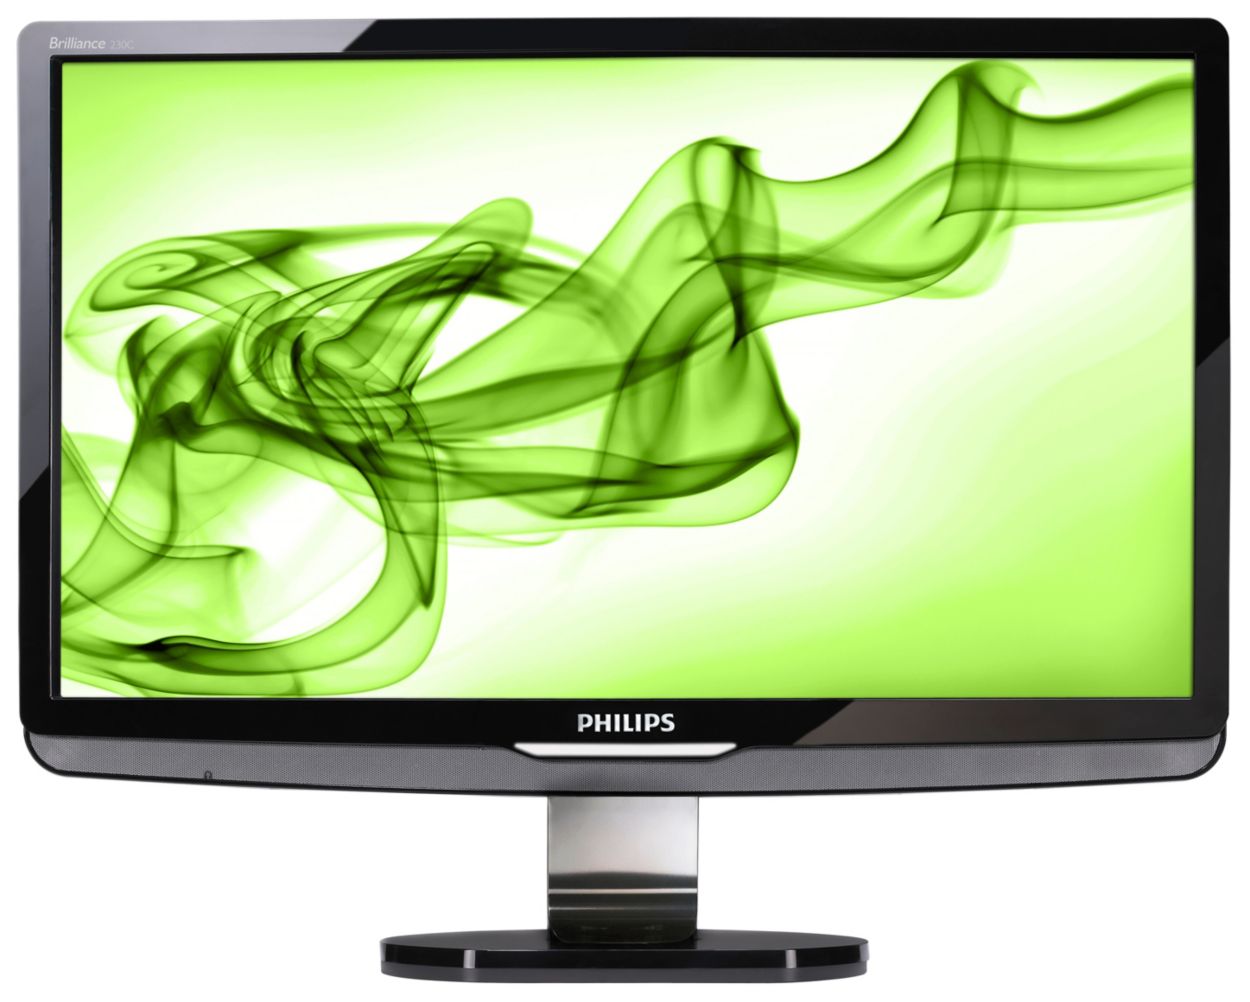 LCD-HDMI-Monitor für Multimediagenuss in Full HD-Qualität.